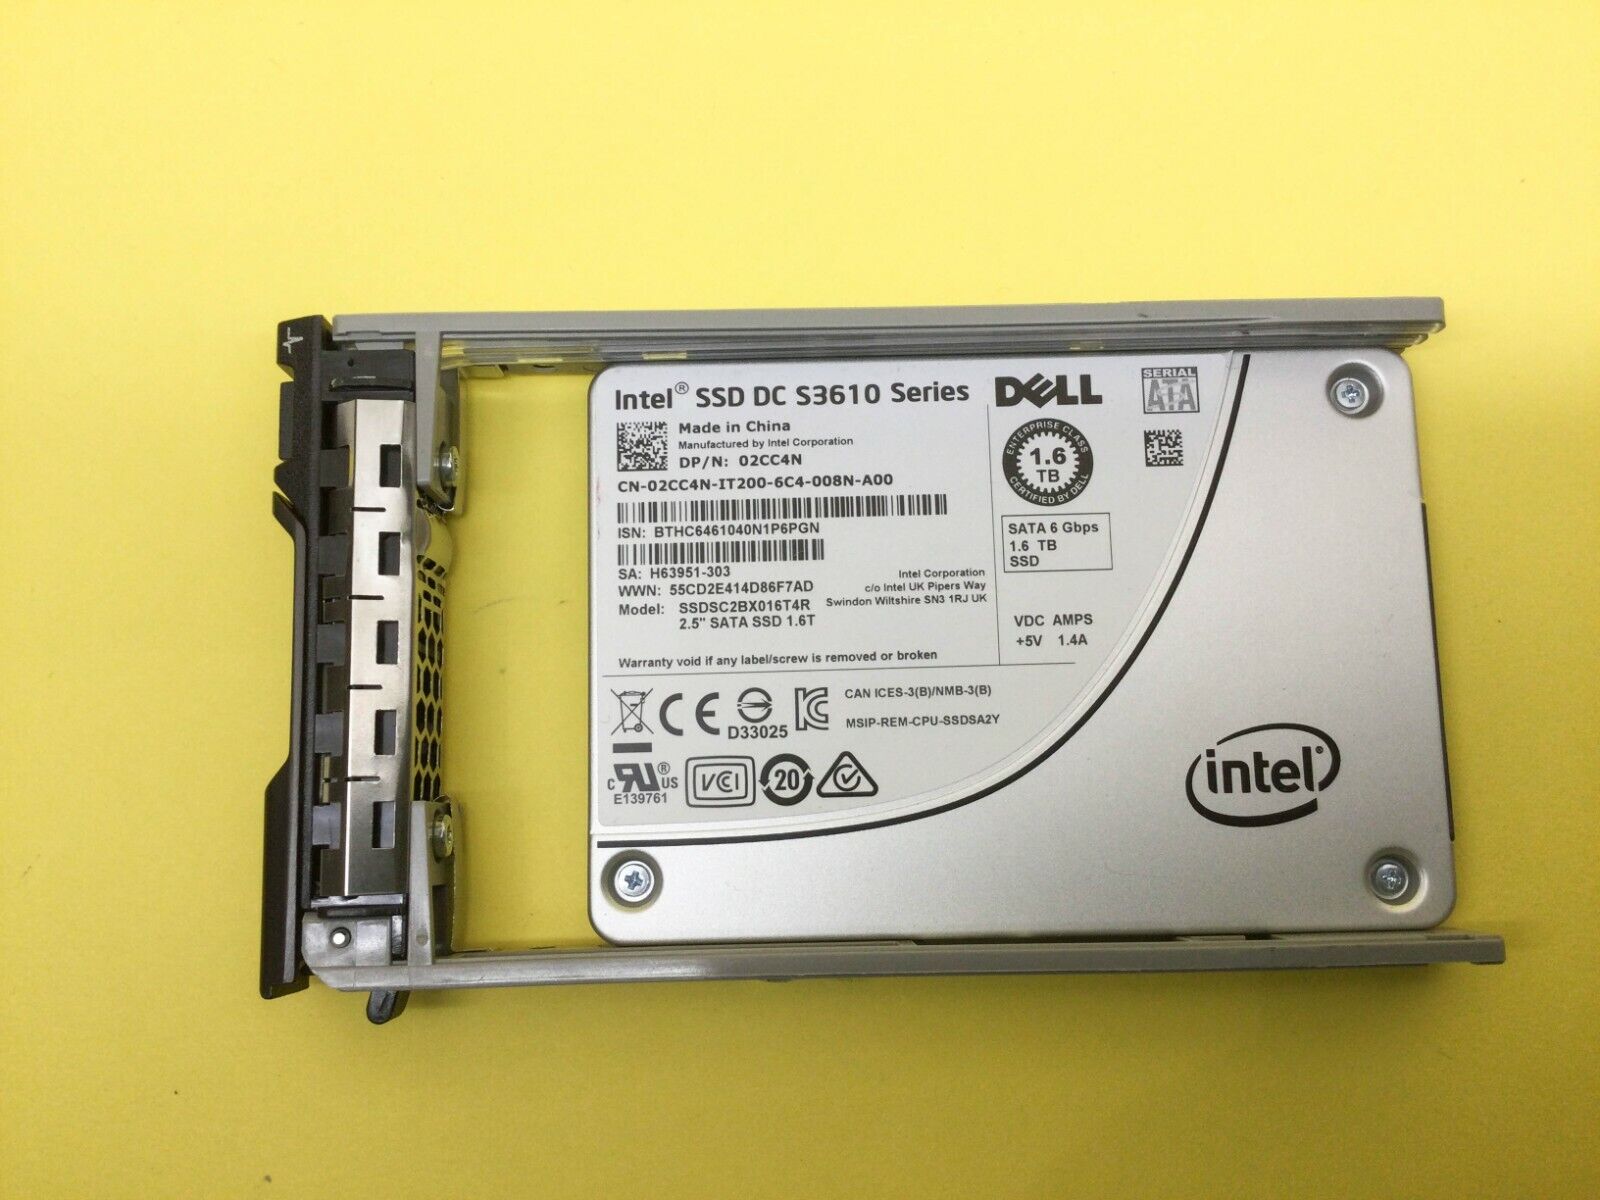 Dell 2CC4N INTEL DC S3610 1.6TB SATA 6Gb/s 2.5in SSD SSDSC2BX016T4R 02CC4N